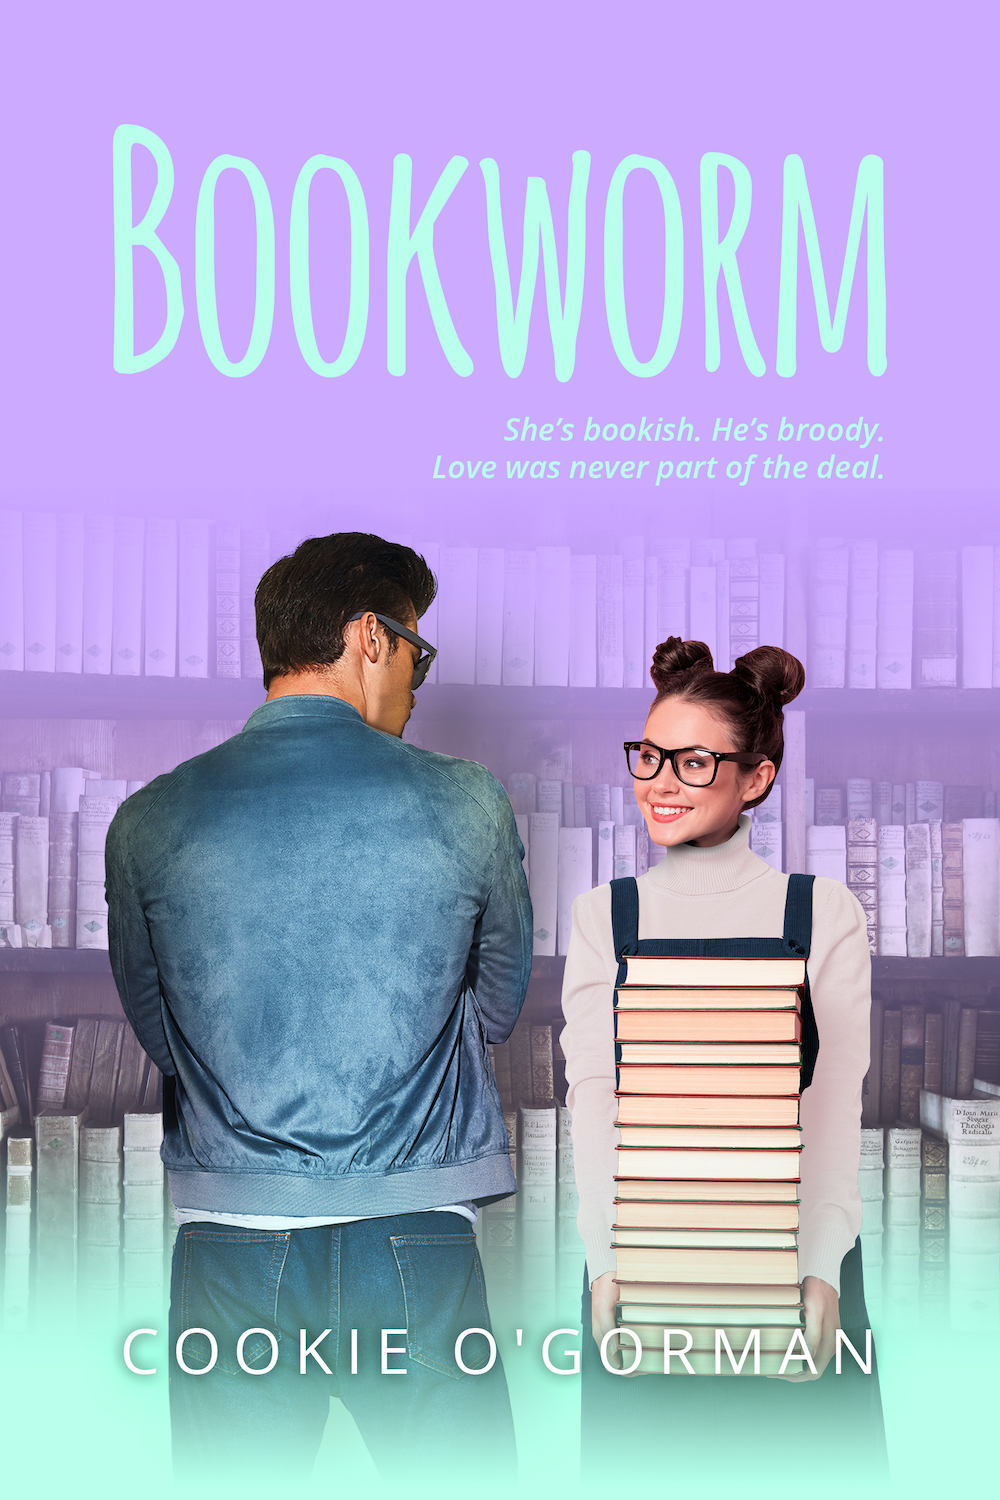 Bookworm by Cookie O’Gorman